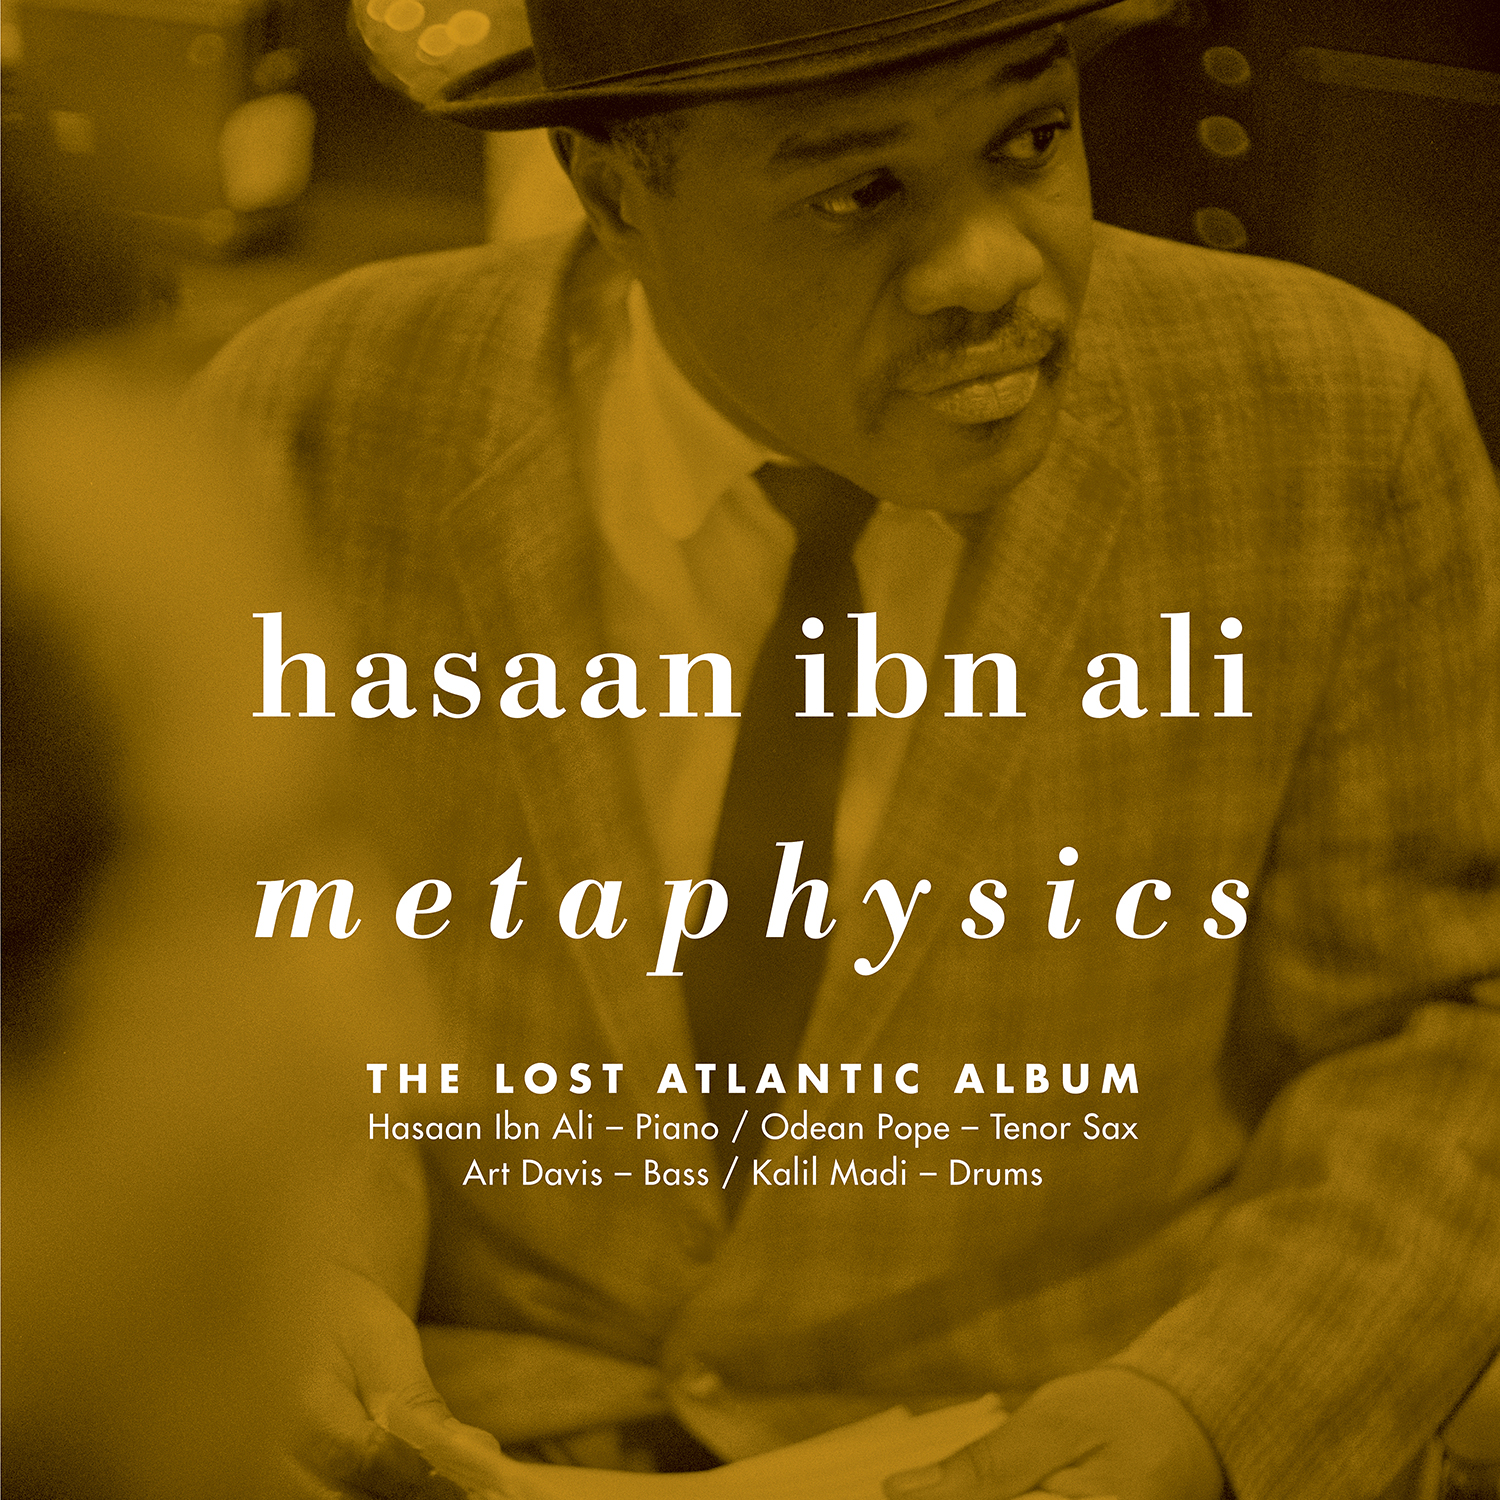 Ali-Hasaan-Ibn-Metaphysics-OV-411.jpg